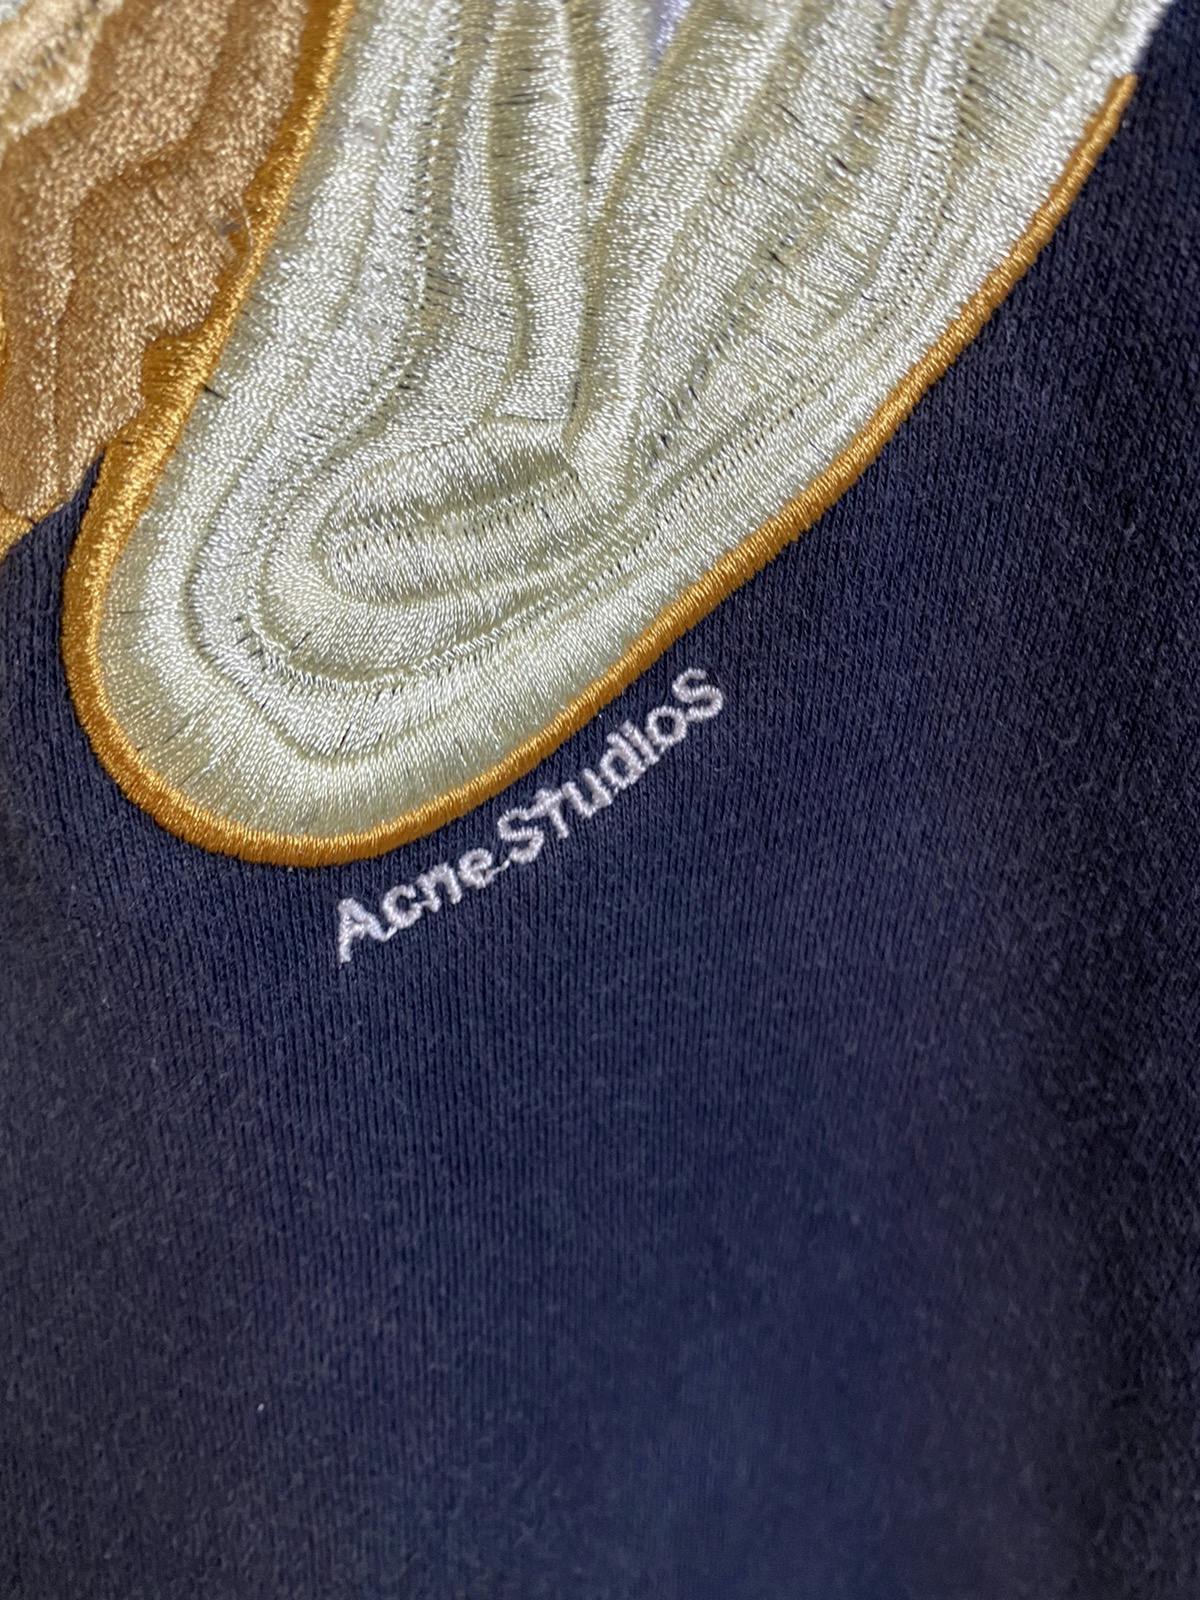 Acne Studios Carly Banana Embroidered Sweatshirt Crewneck - 3